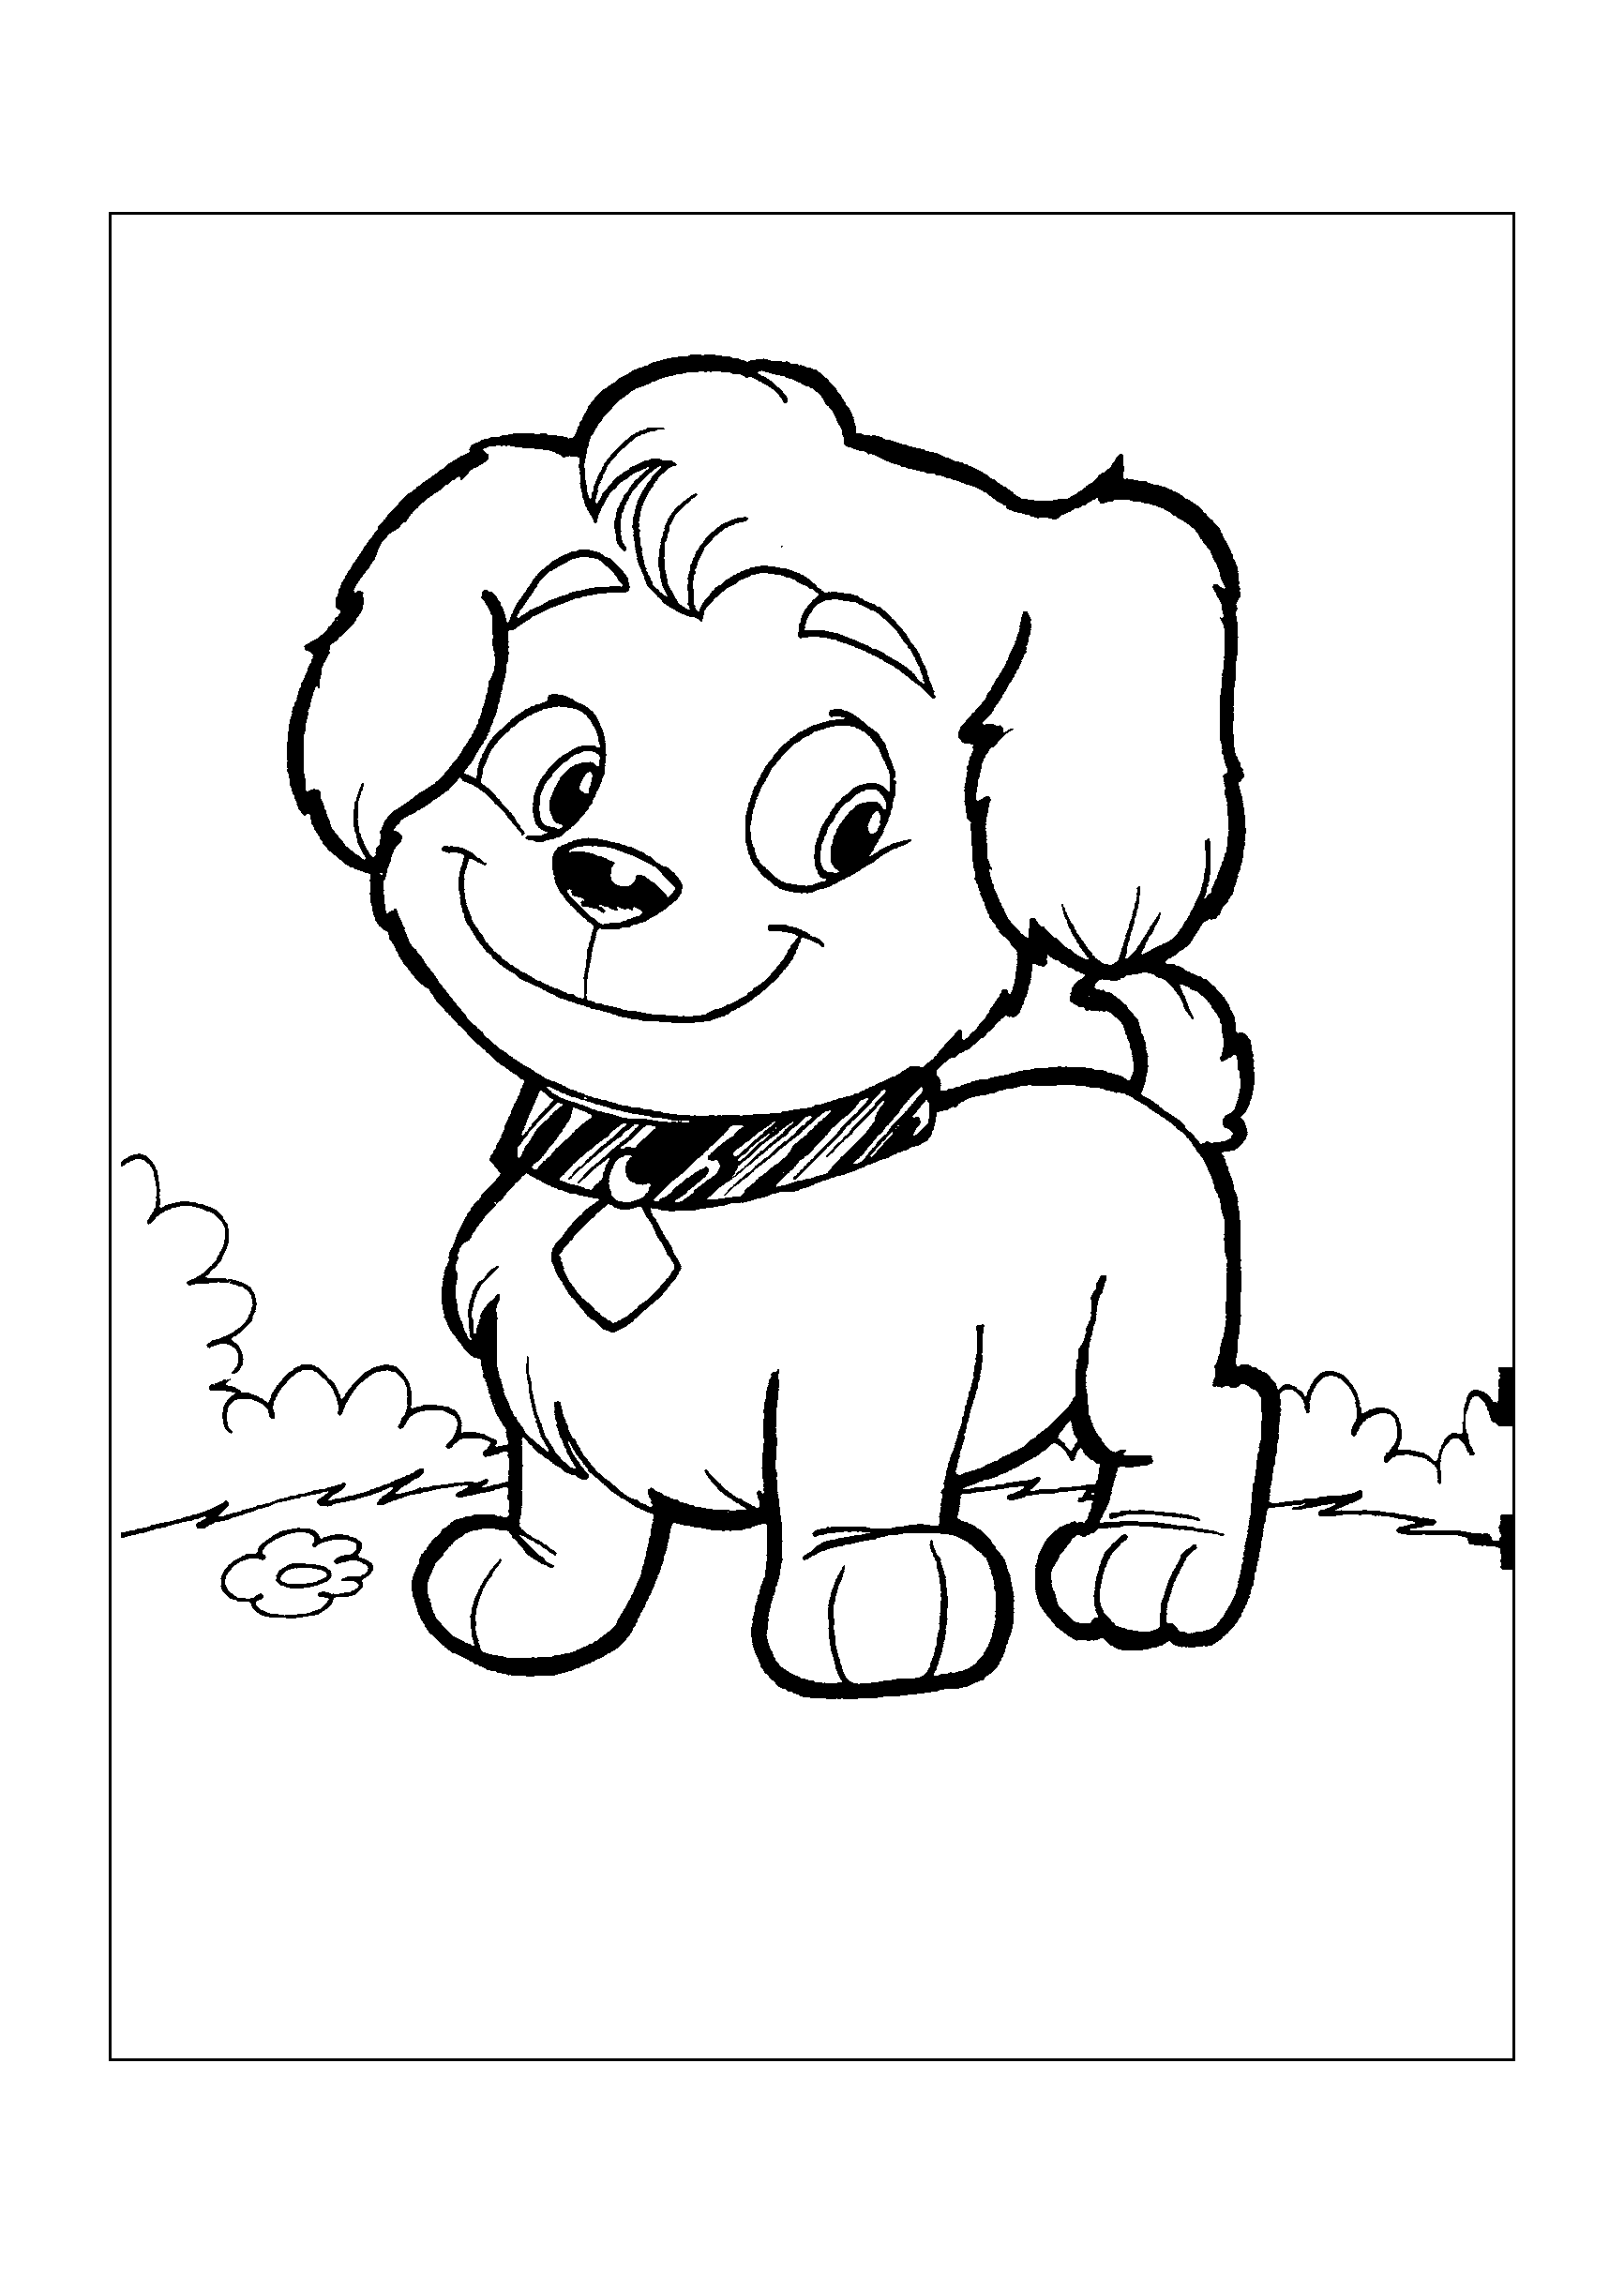 0171-desenho-colorir-cachorra